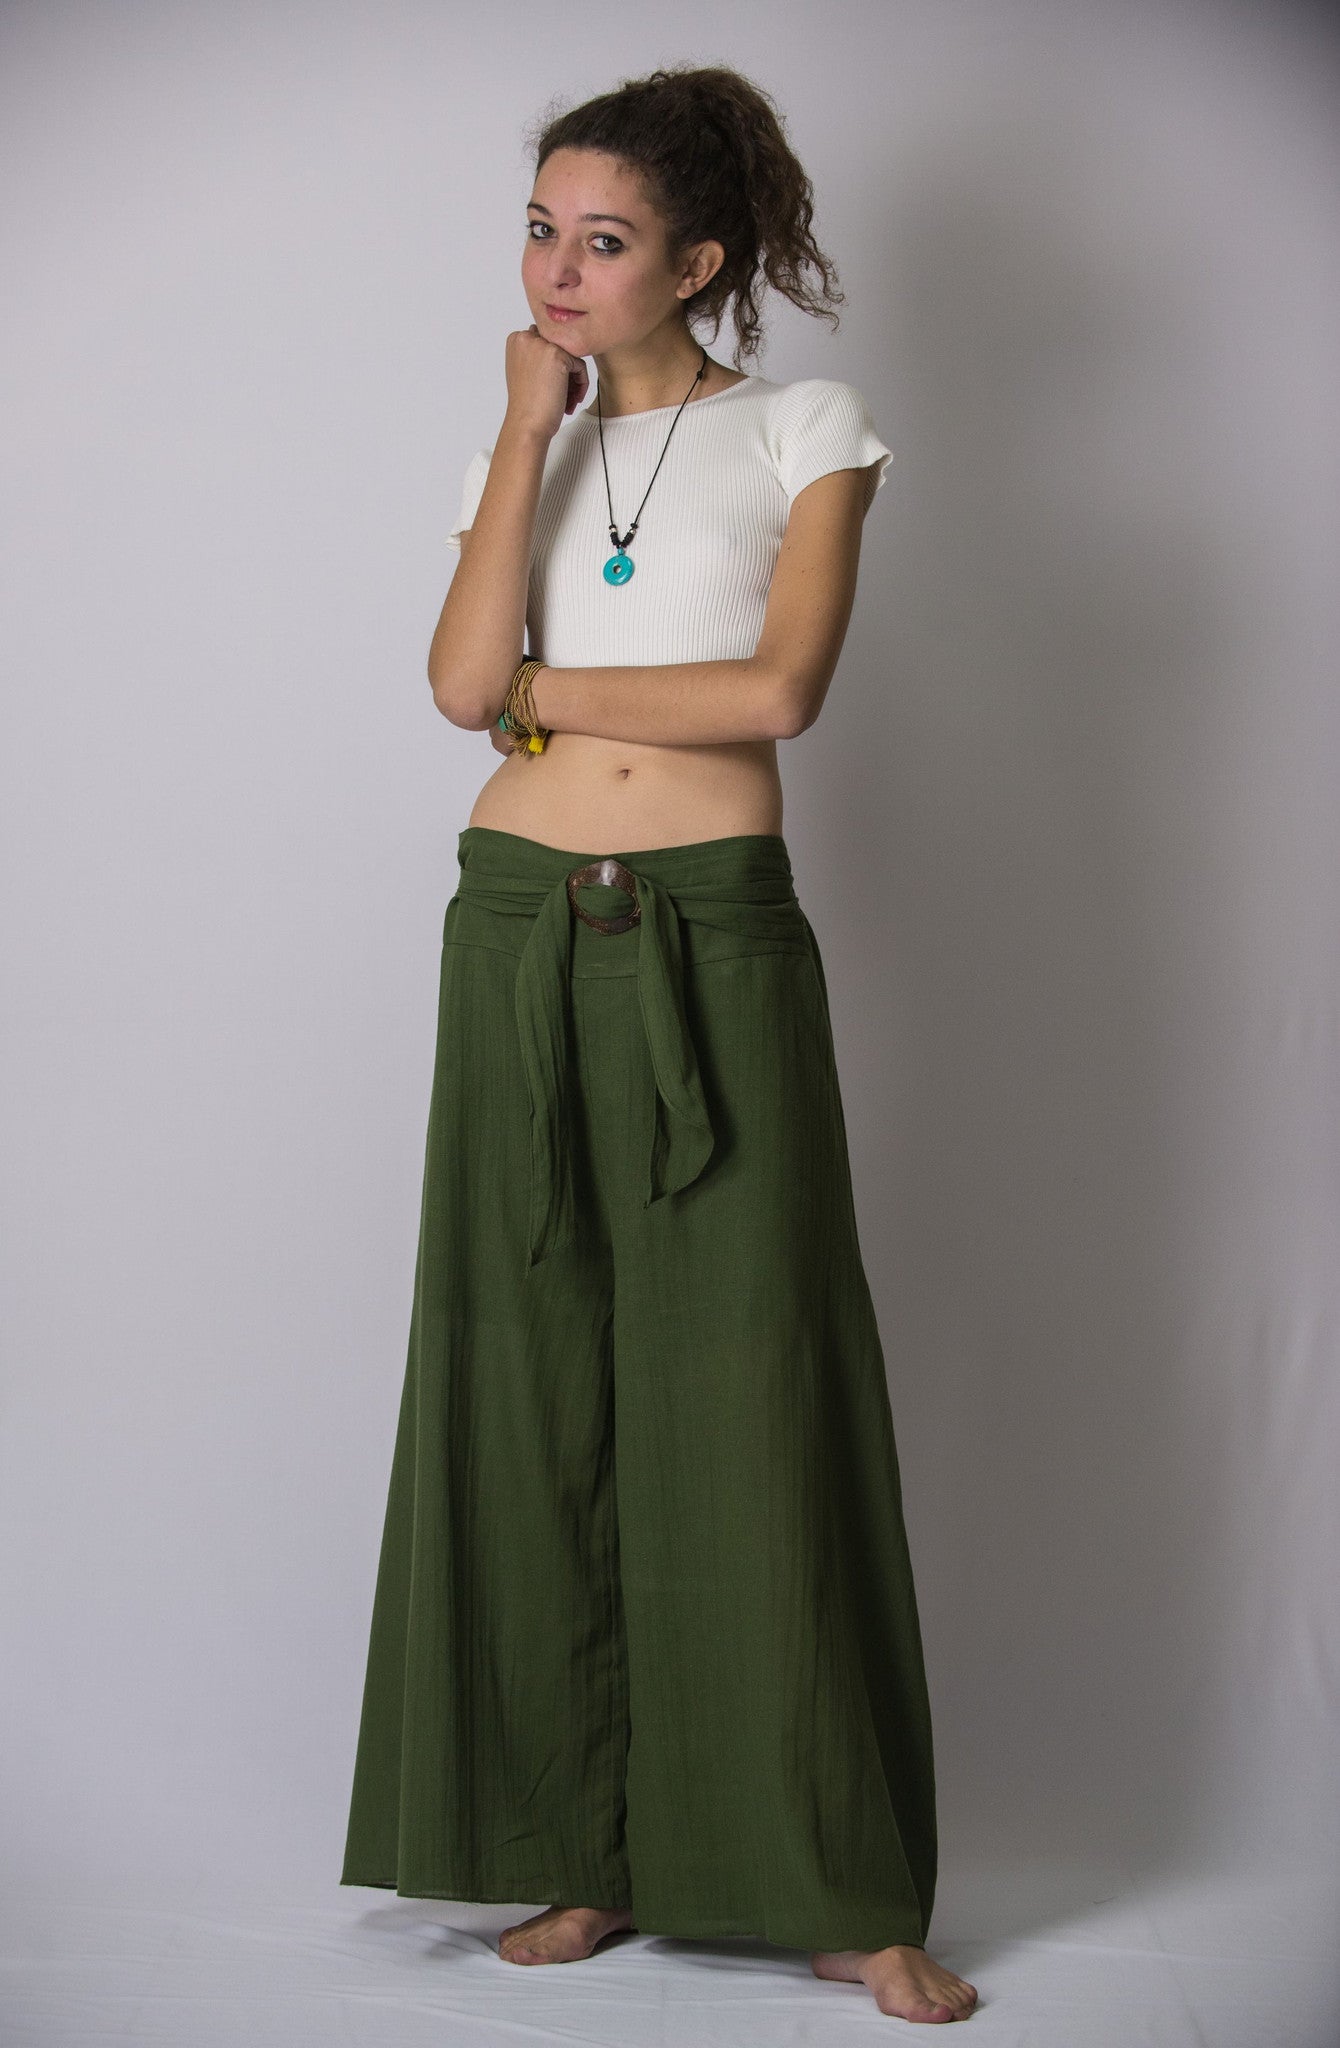 Women's Thai Harem Palazzo Pants in Solid Green – Harem Pants